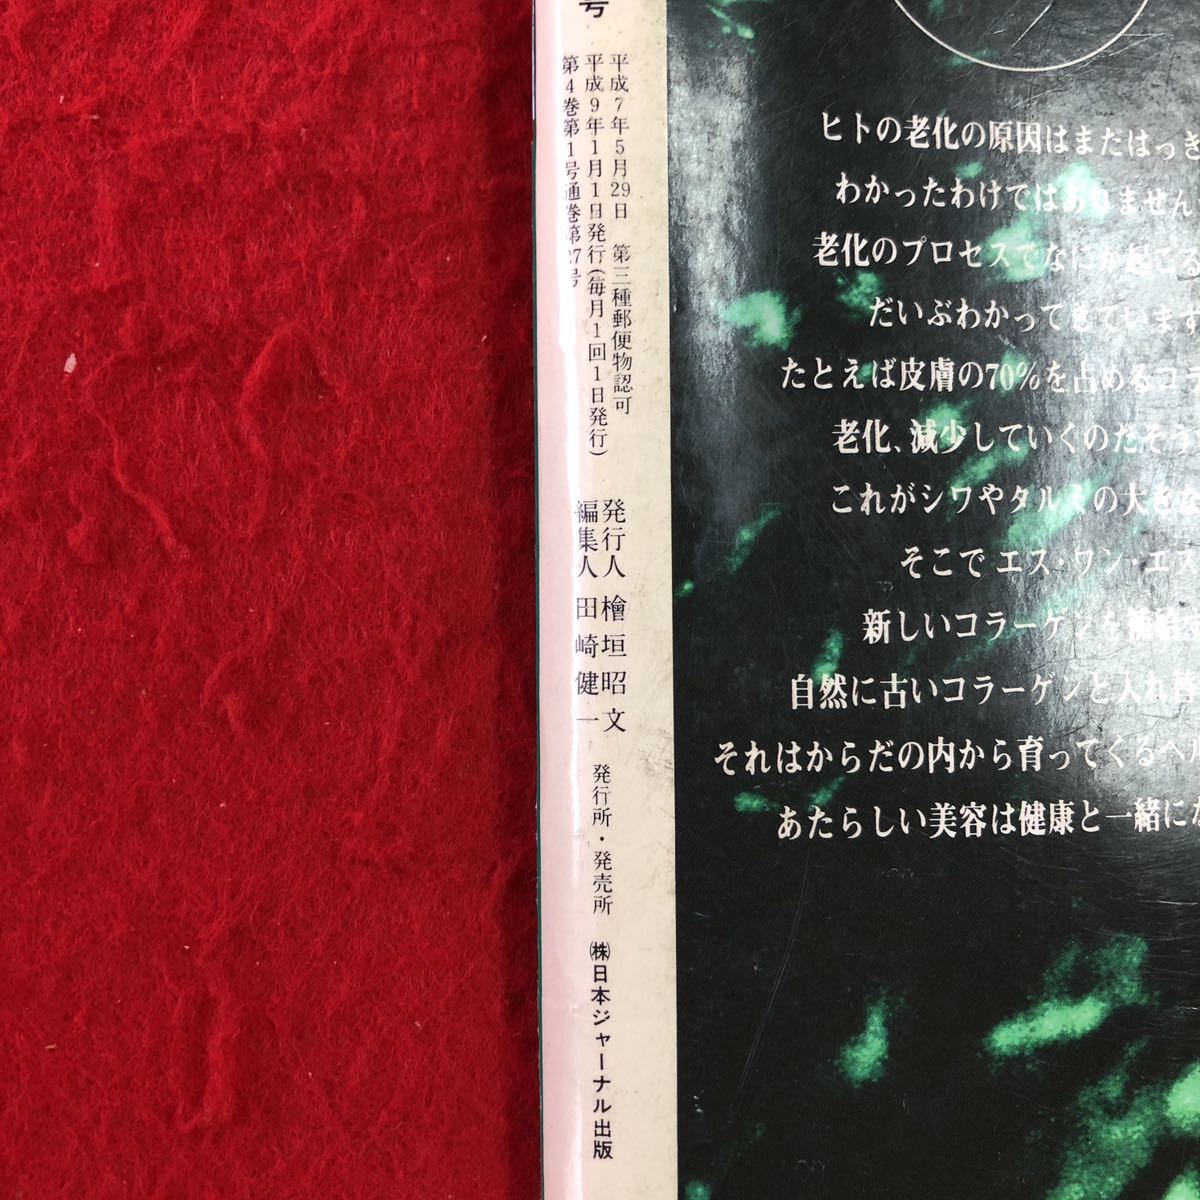 S6c-414 自然薬健康法 平成9年1月号 平成9年1月1日 発行 日本ジャーナル出版 雑誌 健康 料理 レシピ 野菜 予防 砂糖 肺がん 歯周病 育毛剤_画像4